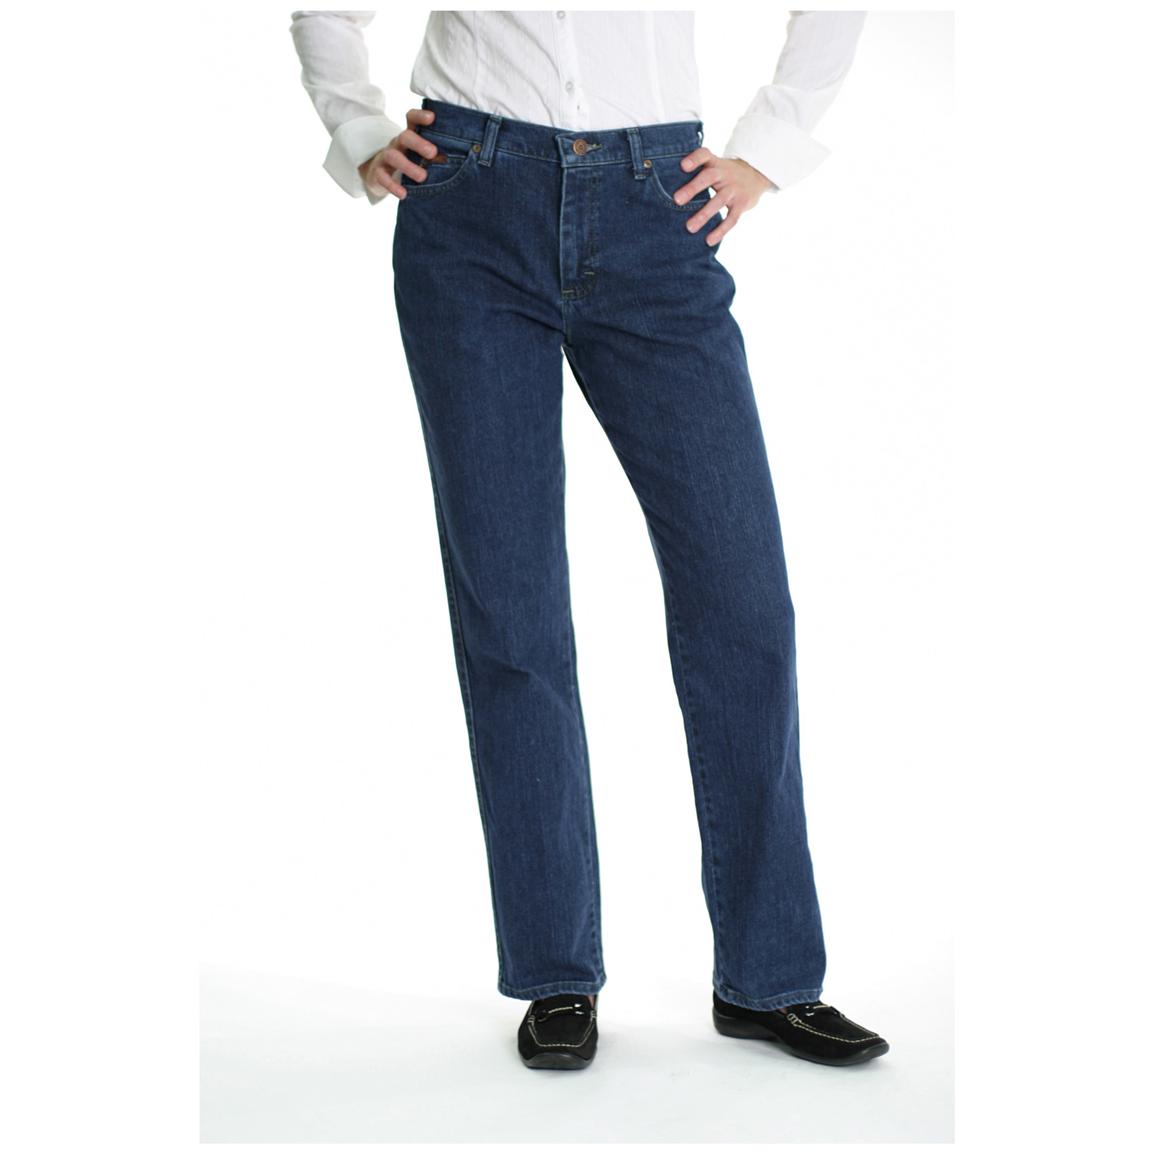 lee jeans for women long short